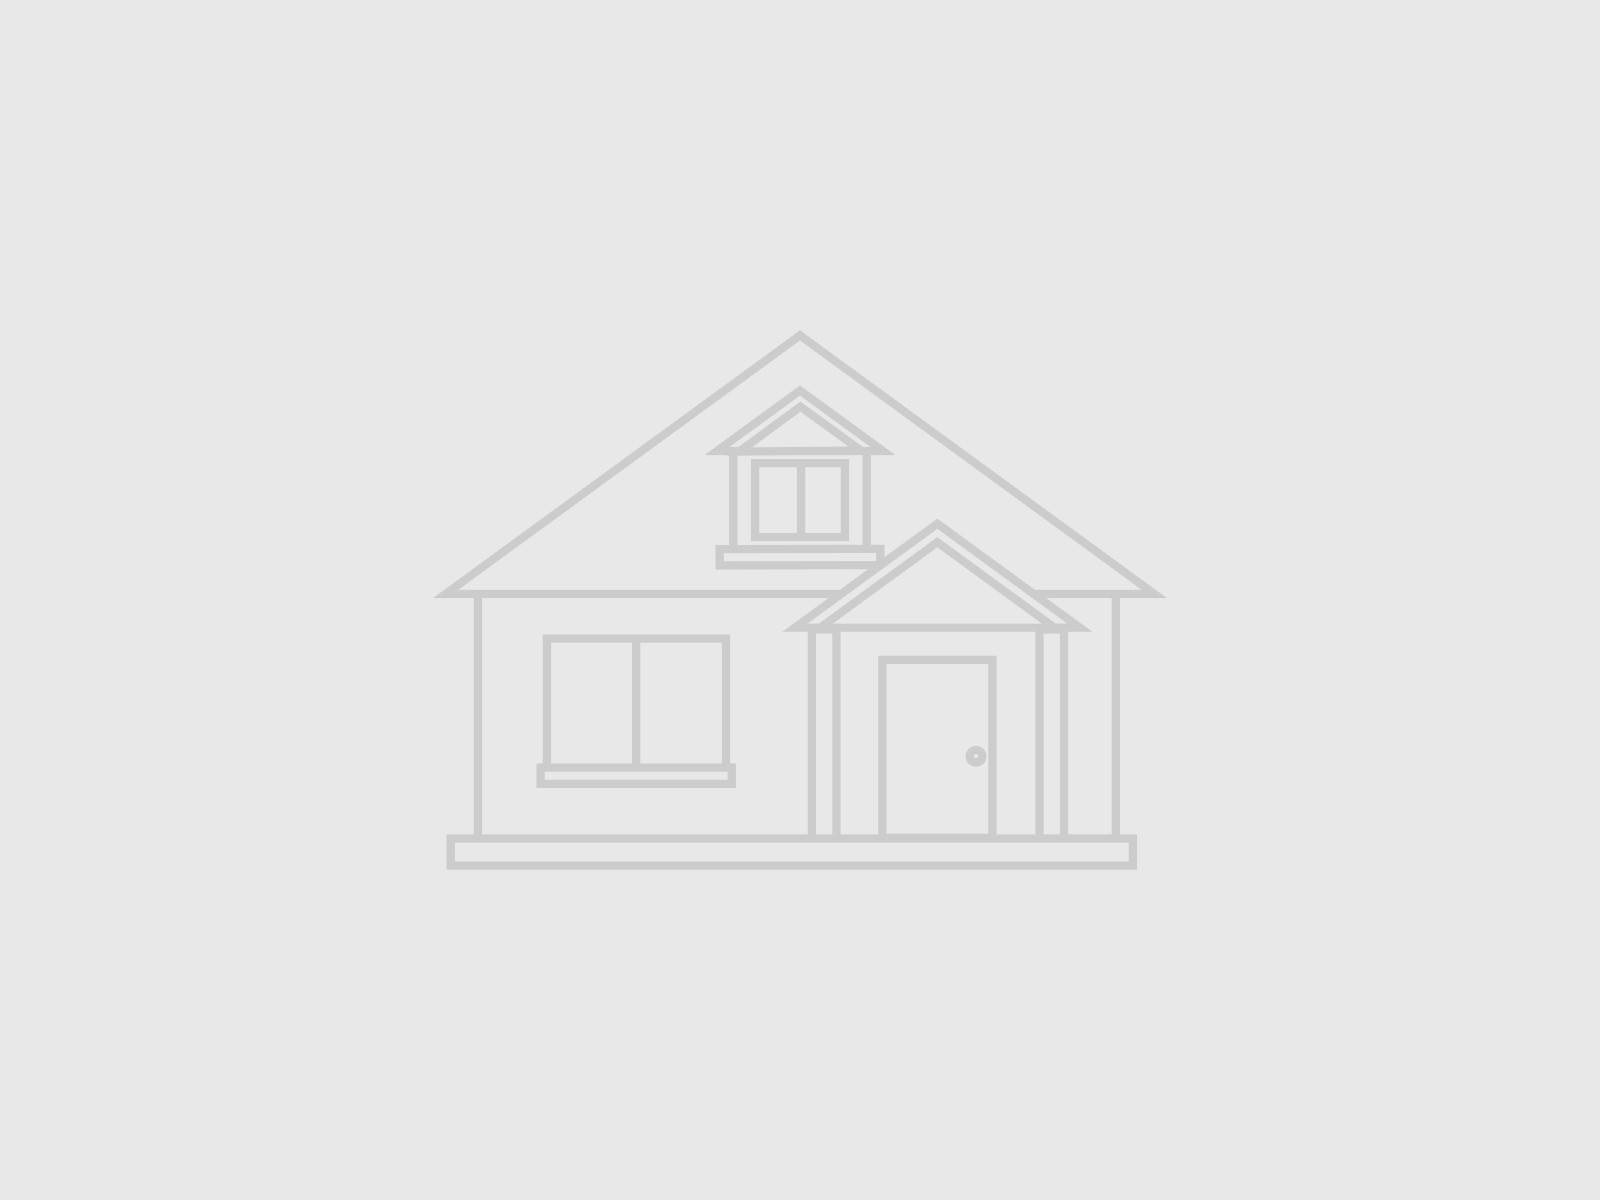 Single Family Homes for Sale at 1945 SOUTH WEBER DR South Weber, Utah 84405 United States